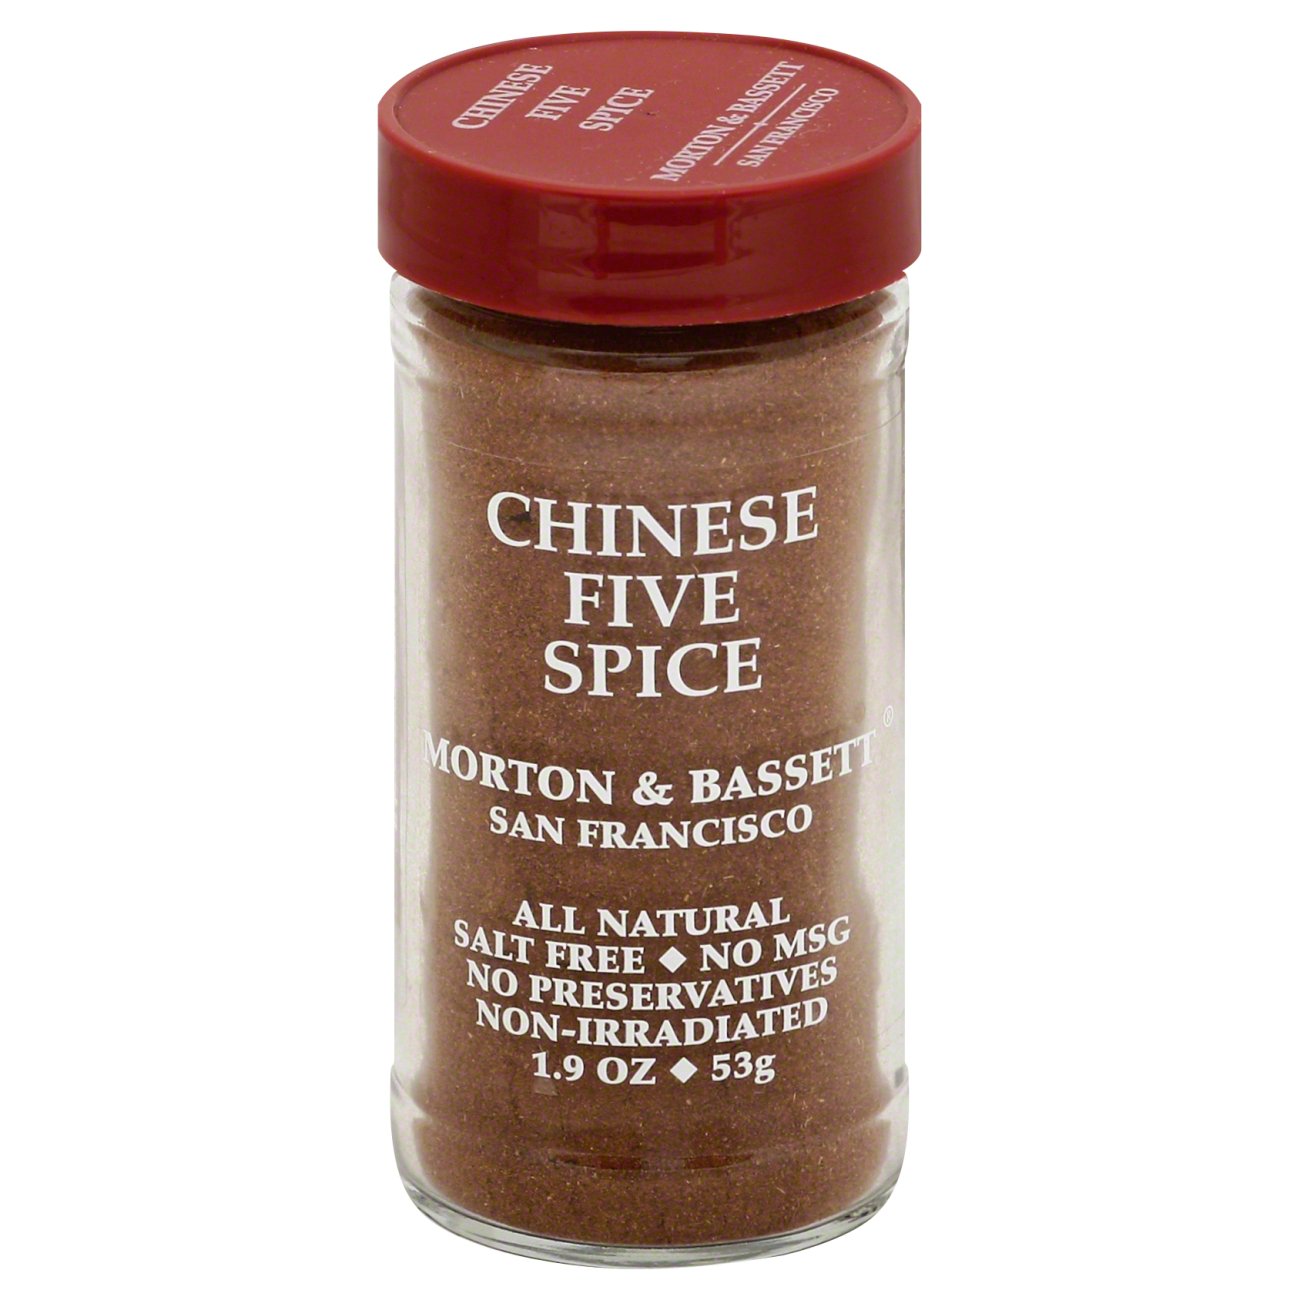 Morton & Bassett Chinese Five Spice